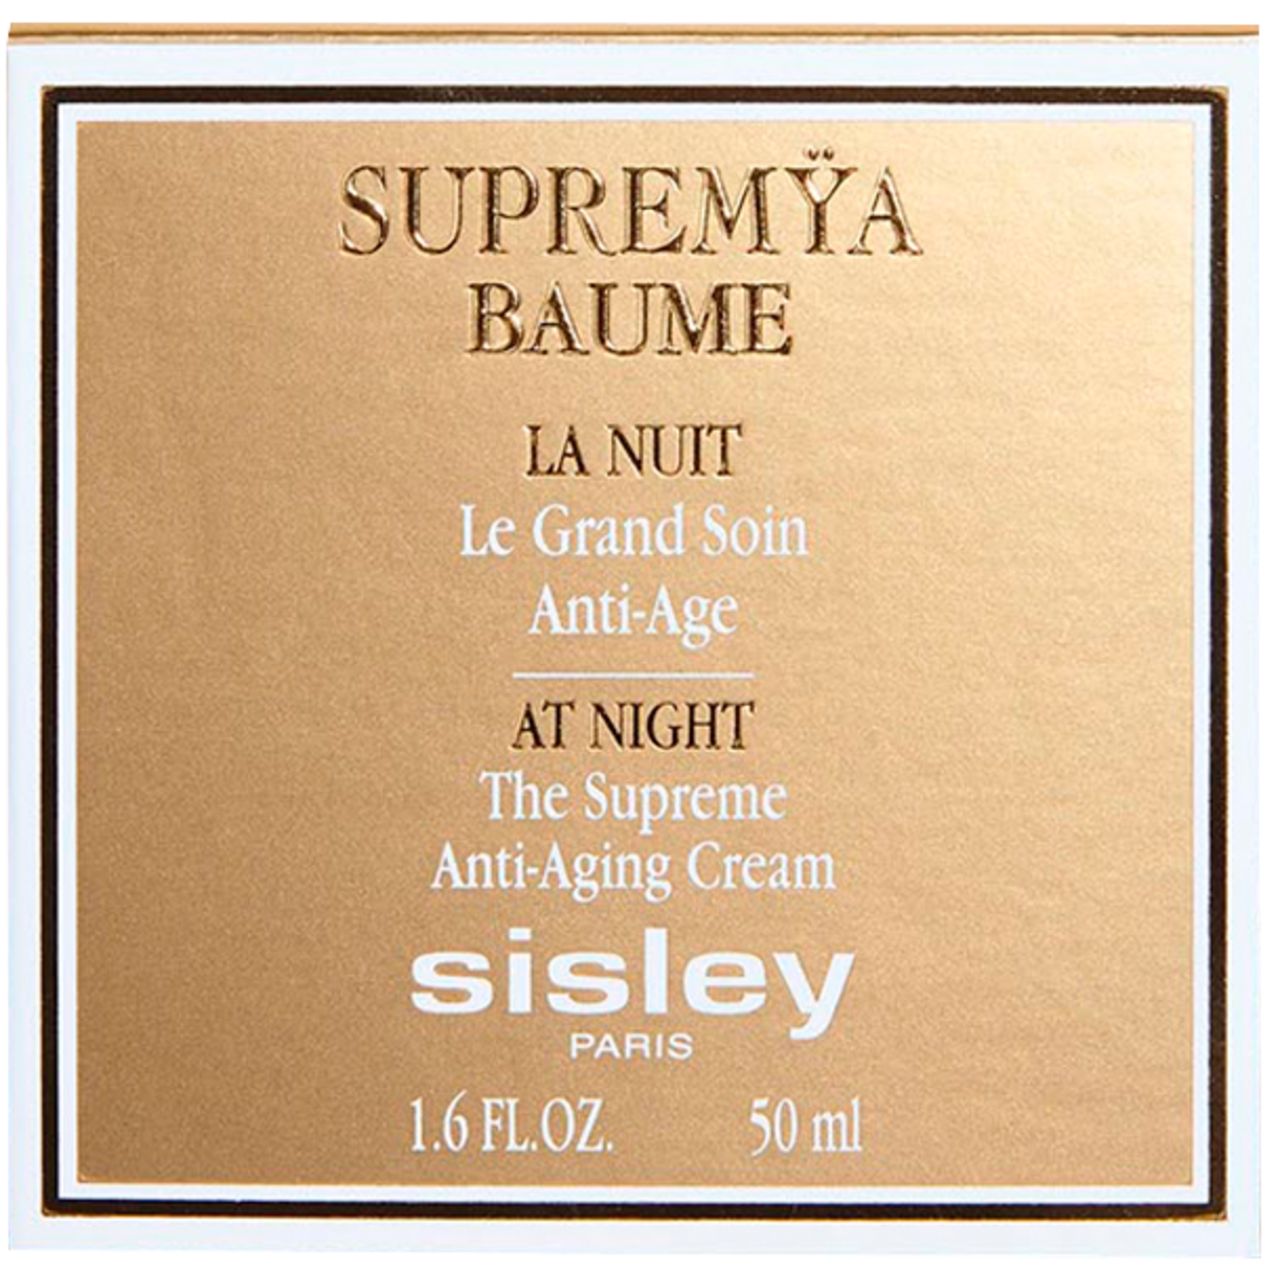 Sisley, Supremya Baume